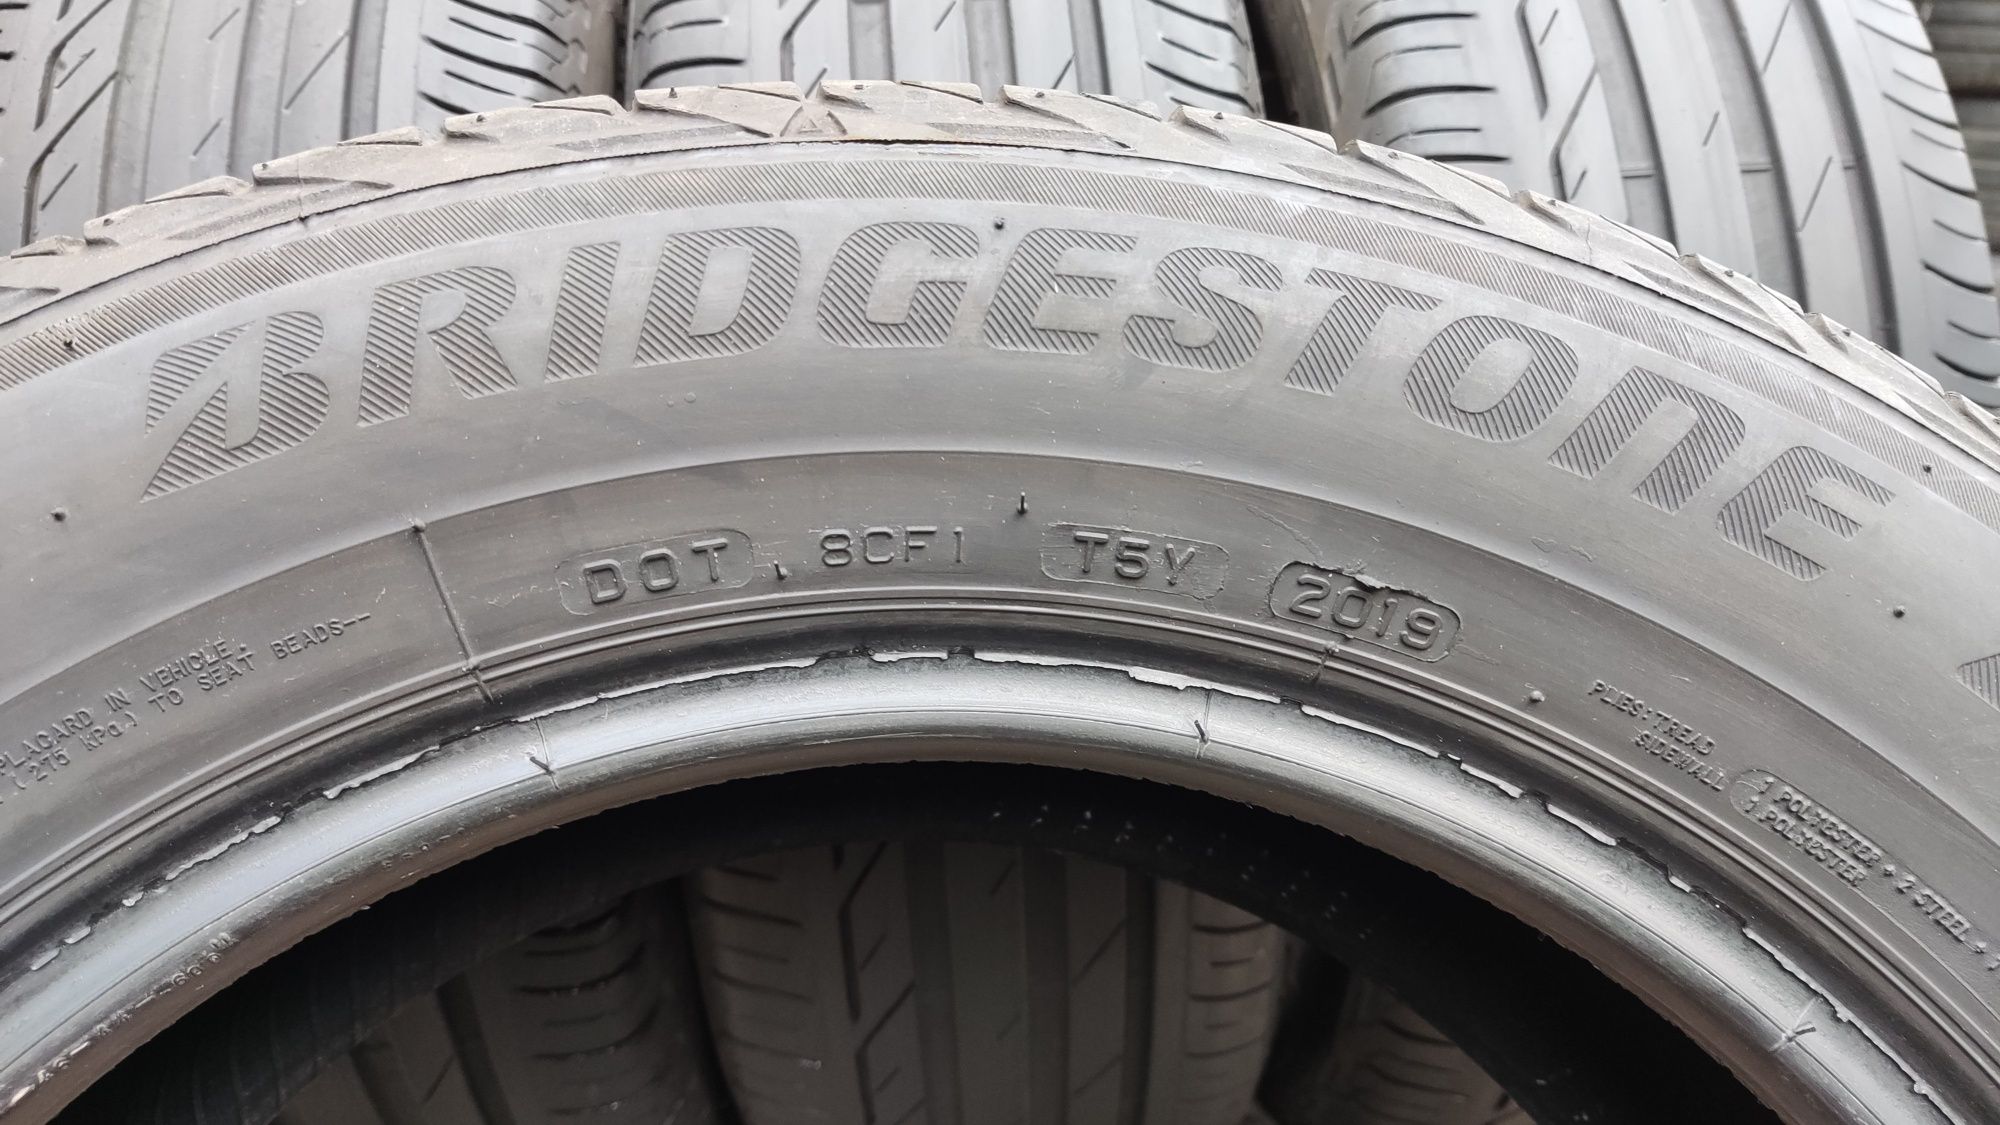 4бр летни гуми 215/60/16 Bridgestone Turanza 001, dot19
dot2019
6.8 m